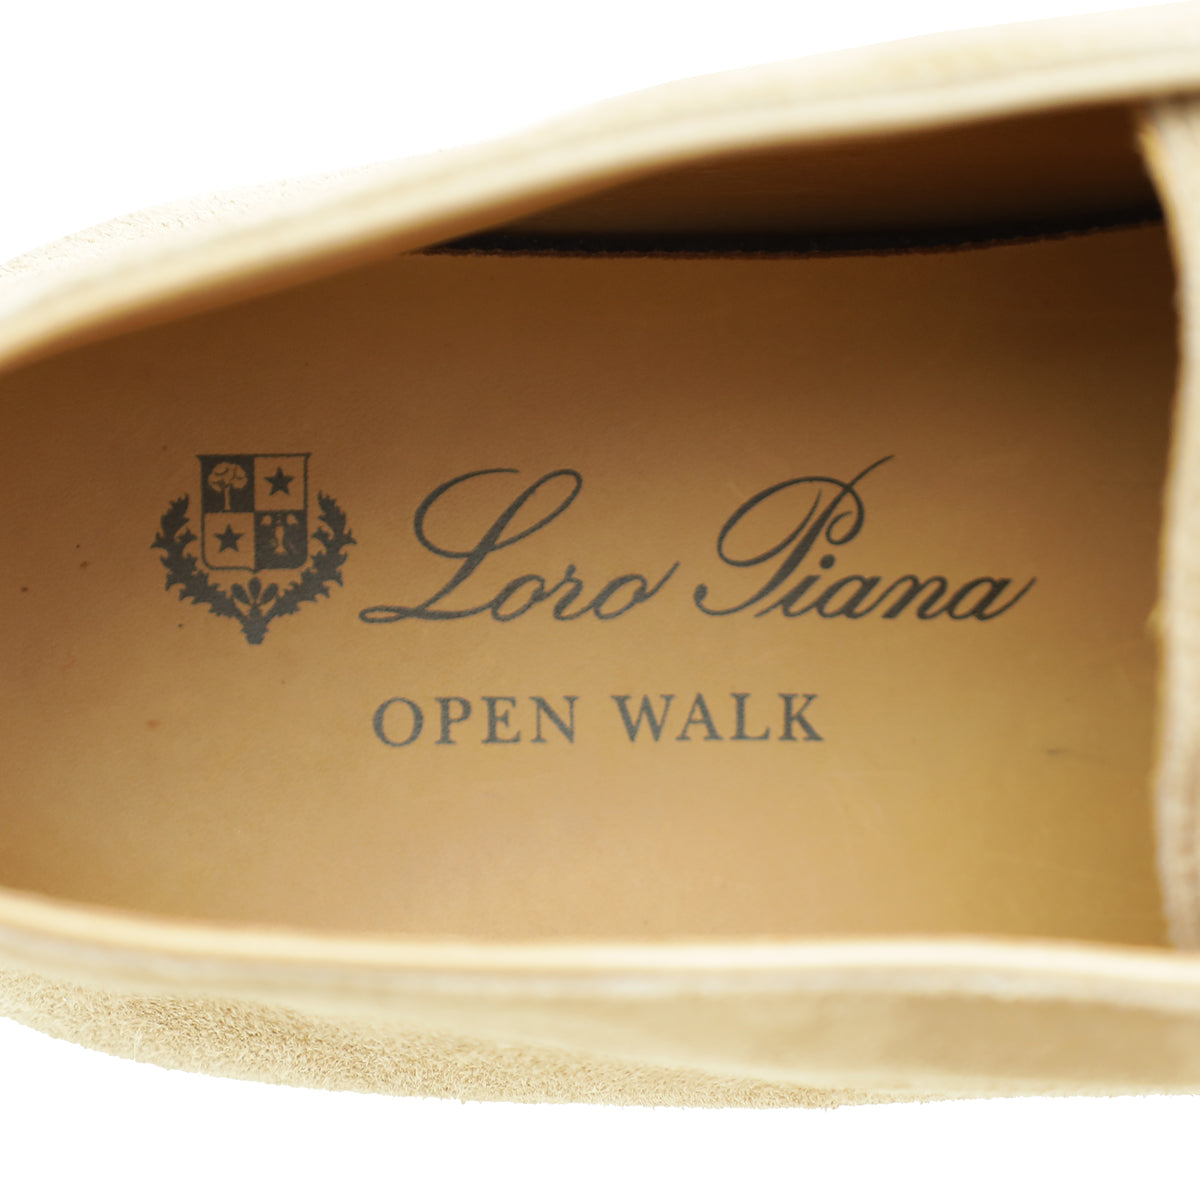 Loro Piana Sandstone Suede Open Walk Chukka Boots 38